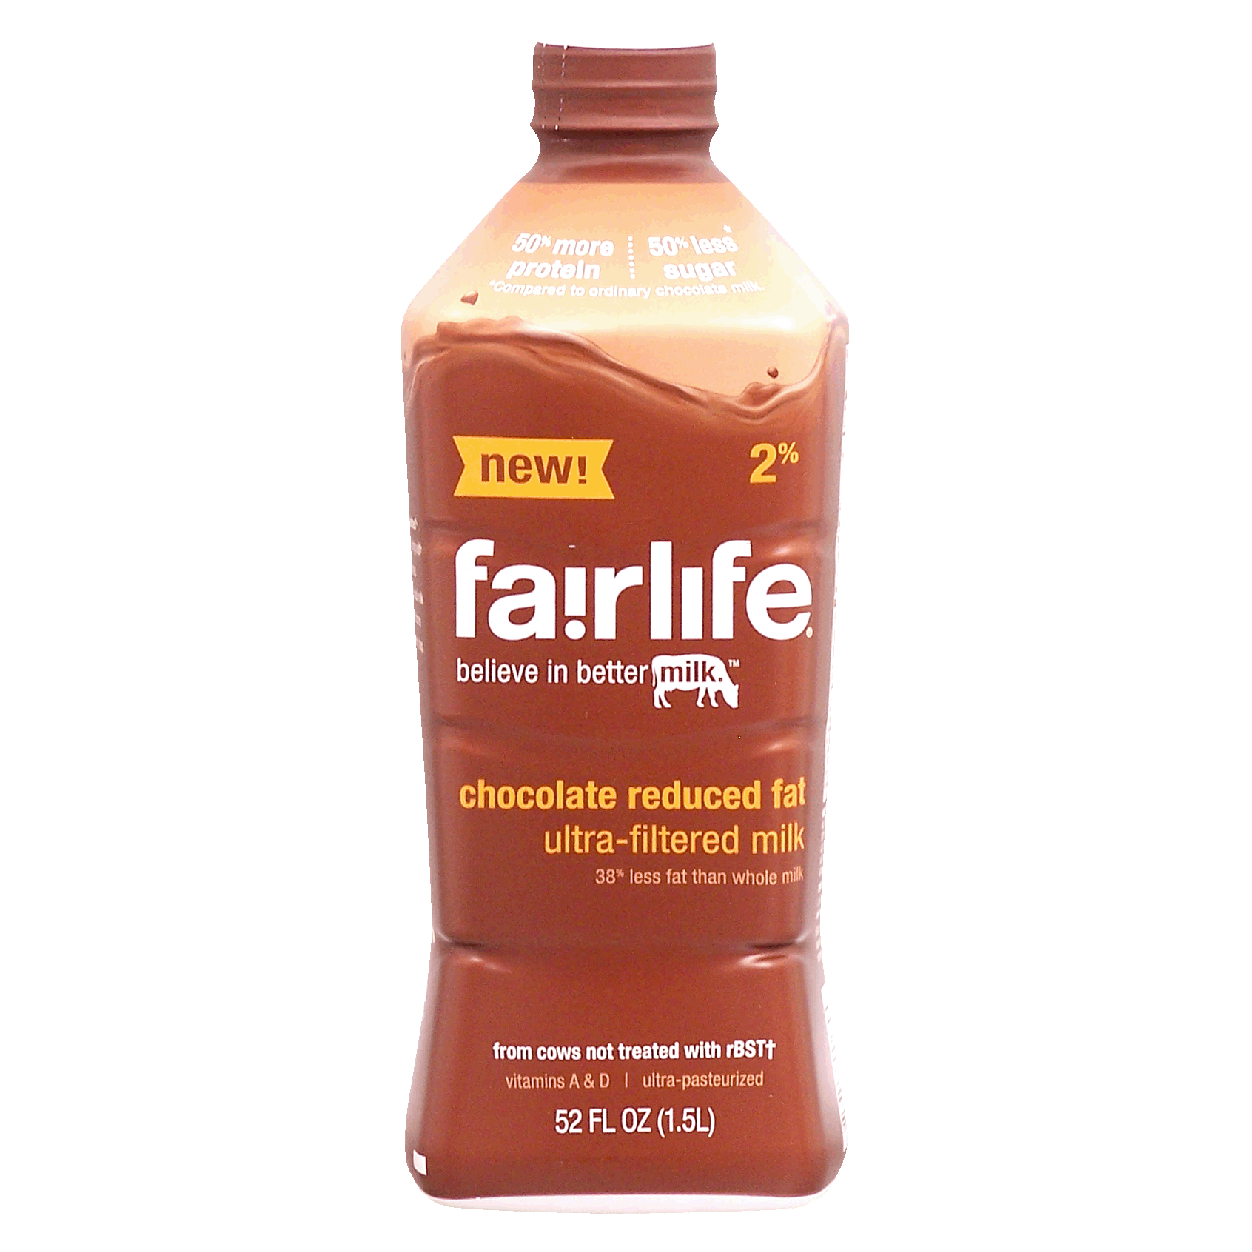 Fairlife Logo - fairlife chocolate reduced fat ultra-filtered milk 52fl oz - Milk ...